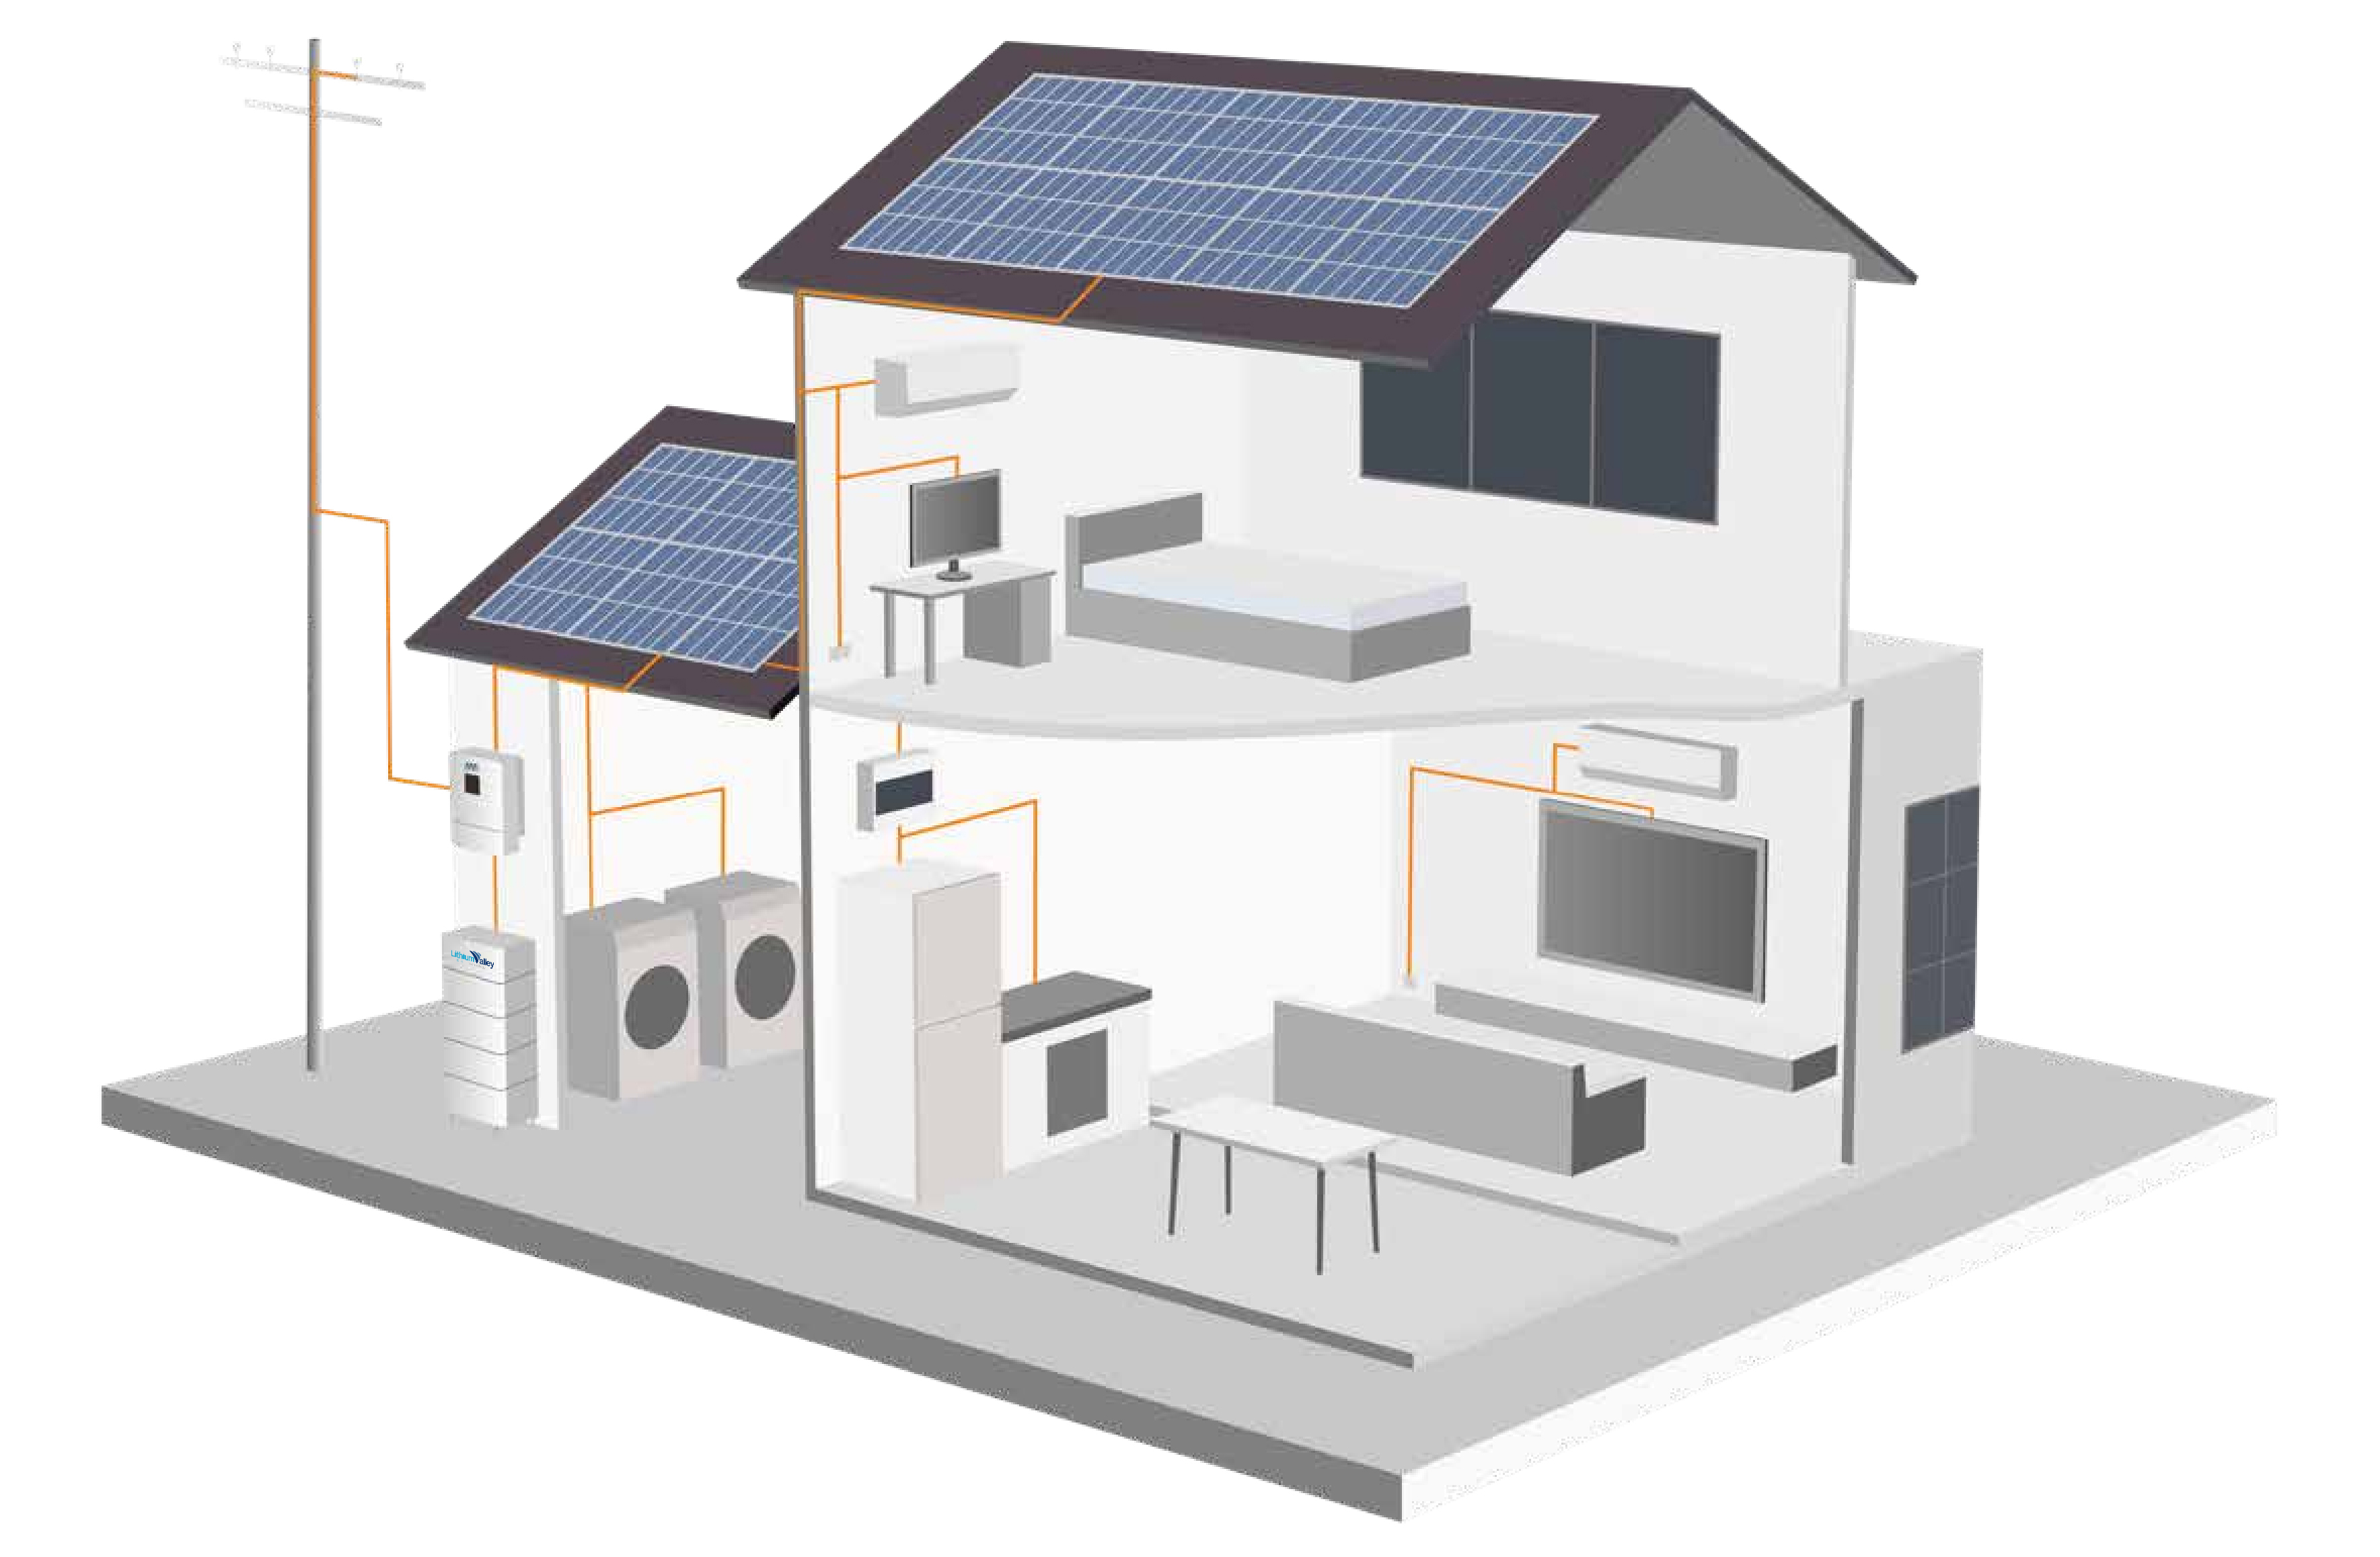 Home Energy Storage System 